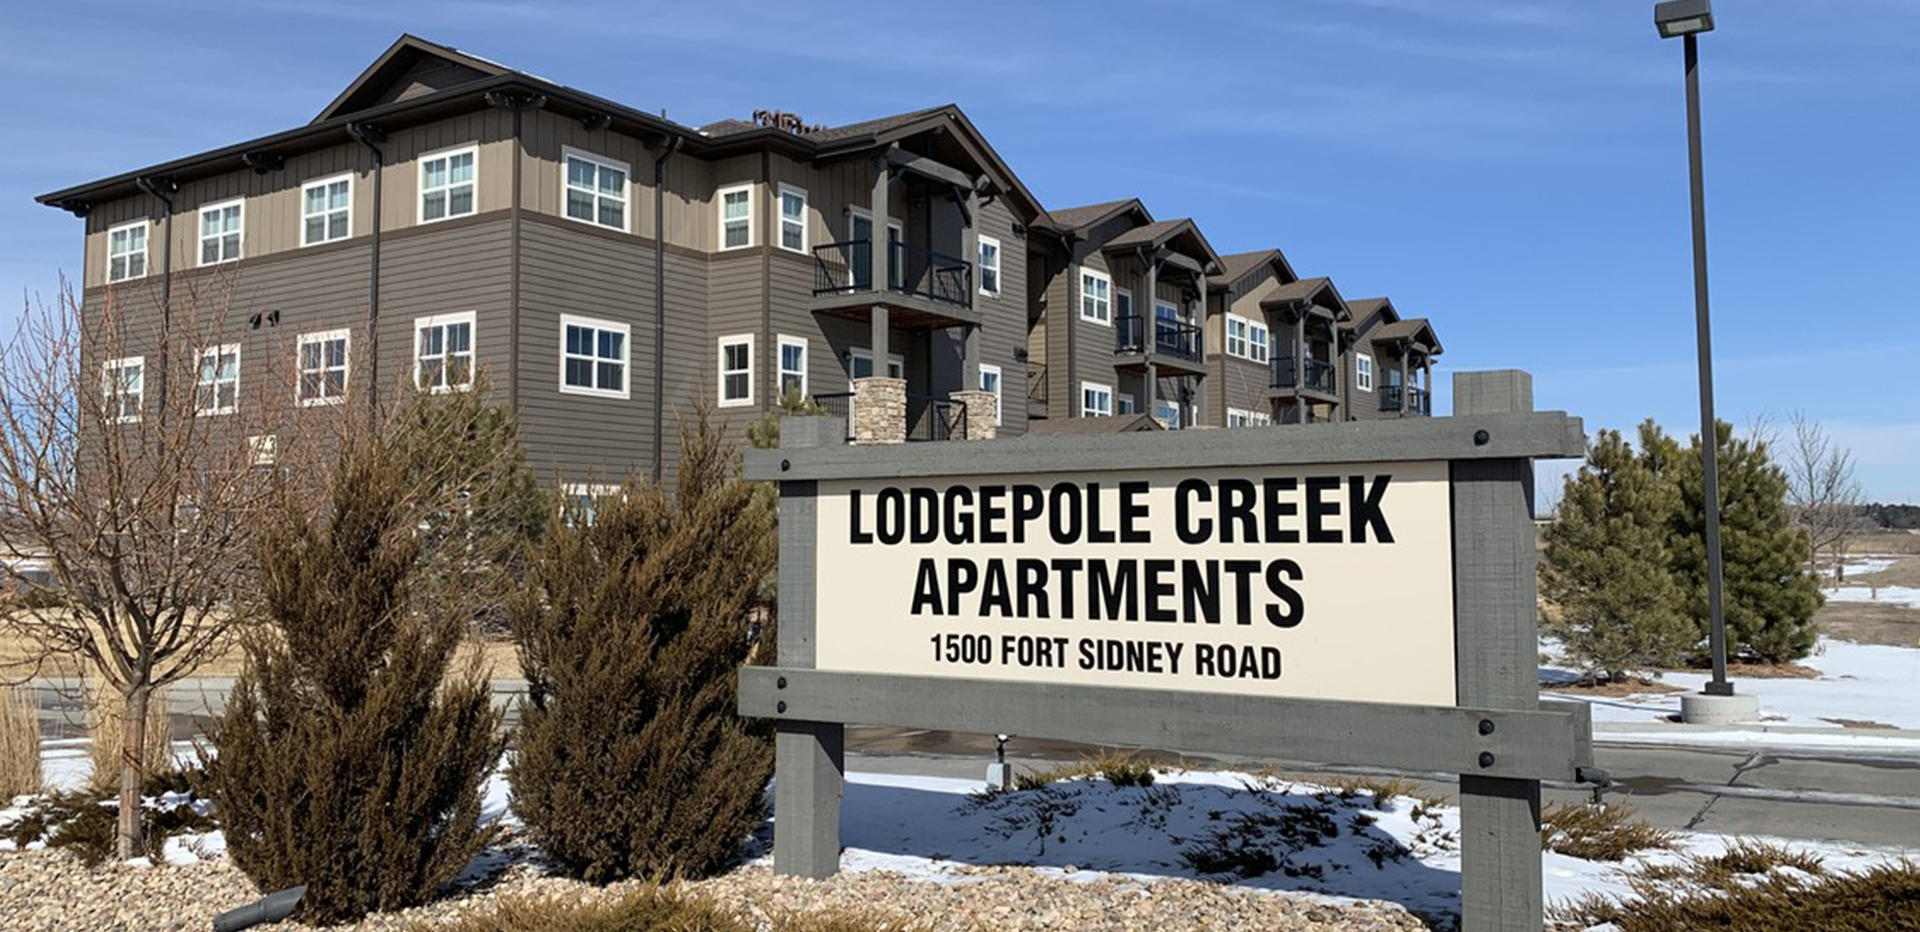 Lodgepole Creek Apartments entrance sign.